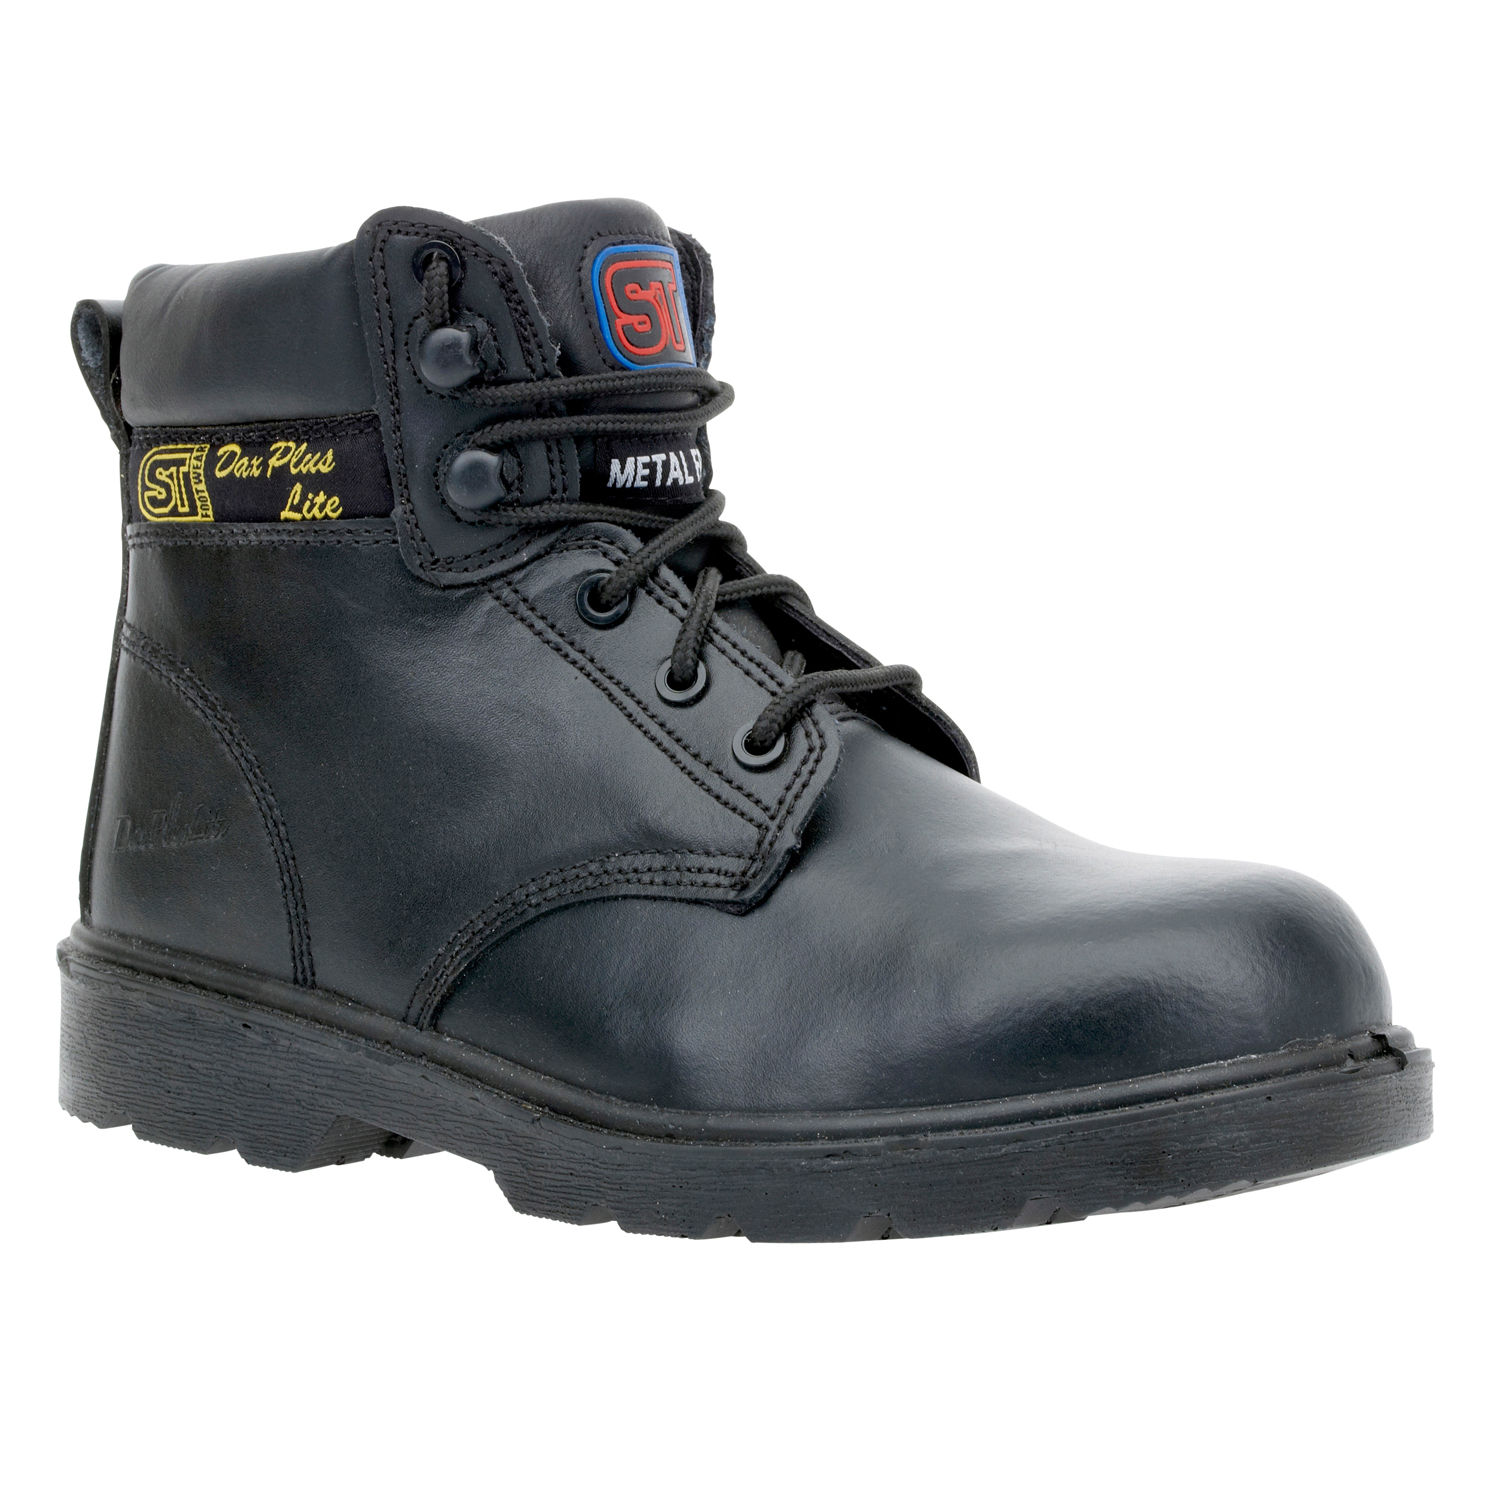 Dax Plus Lite Boot -Size 13 S1P Metal Free  Black leather Comp toe & Kevla sole